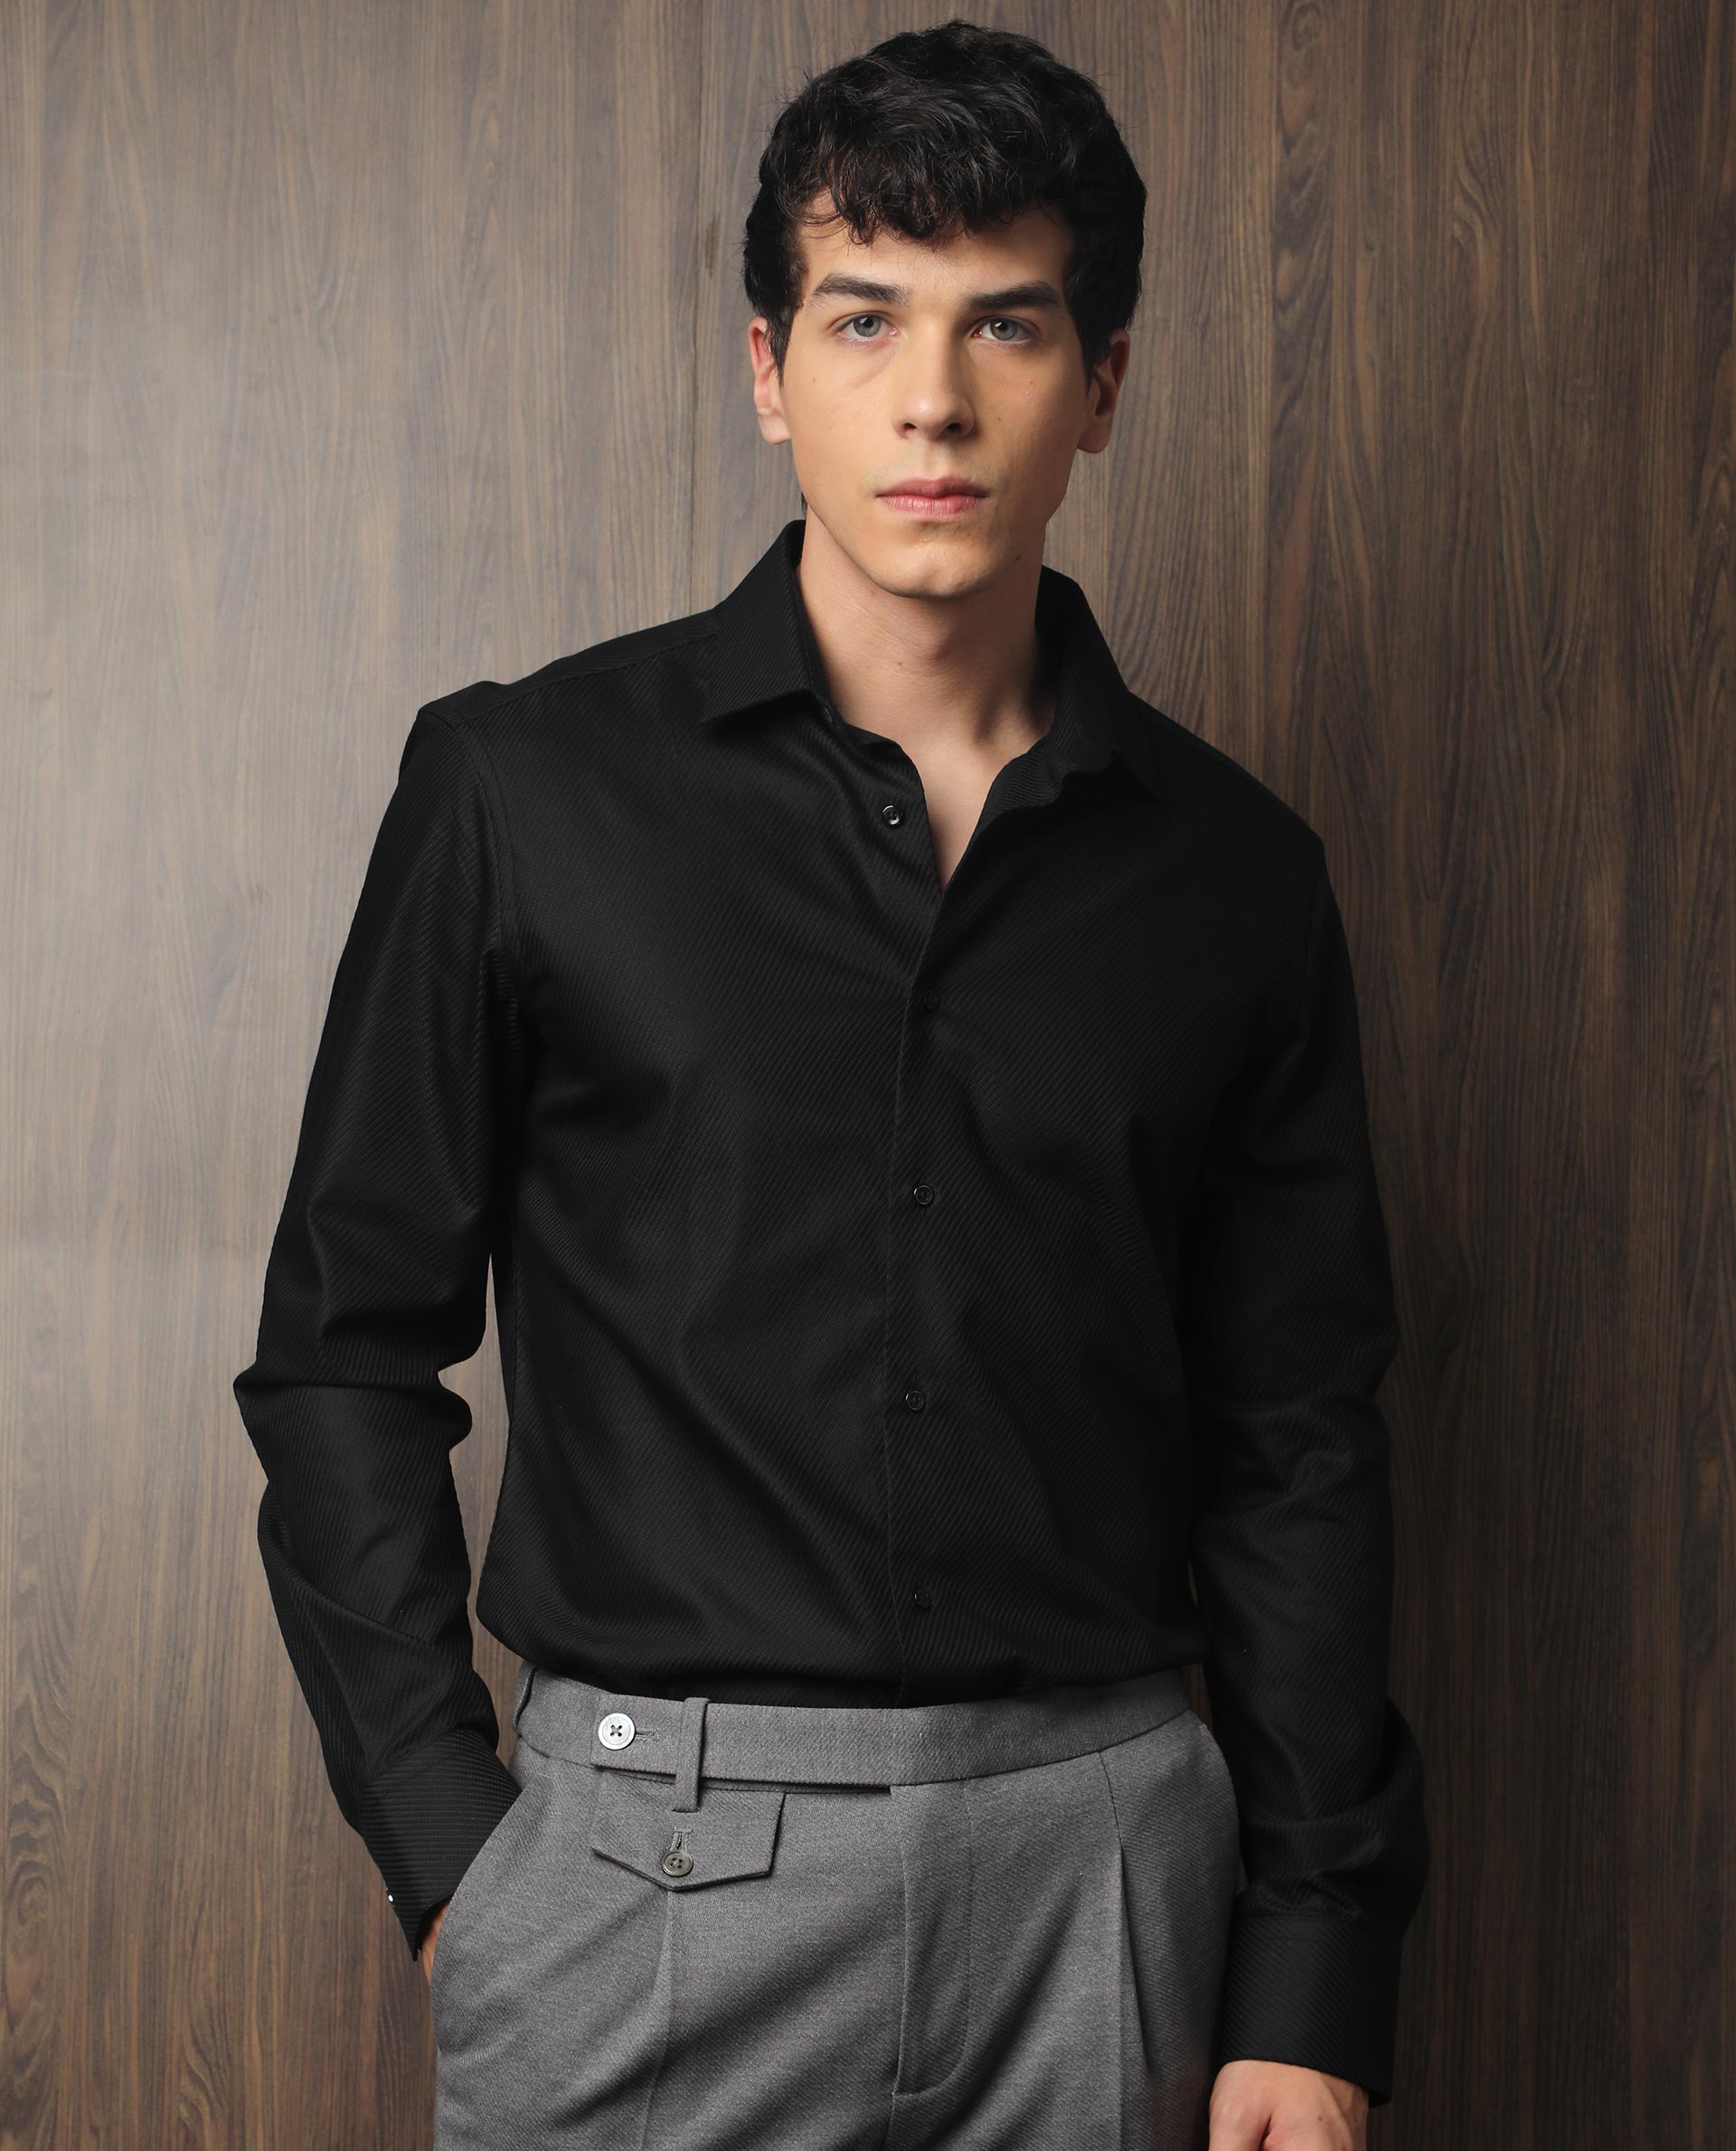 gray color pants and black shirt